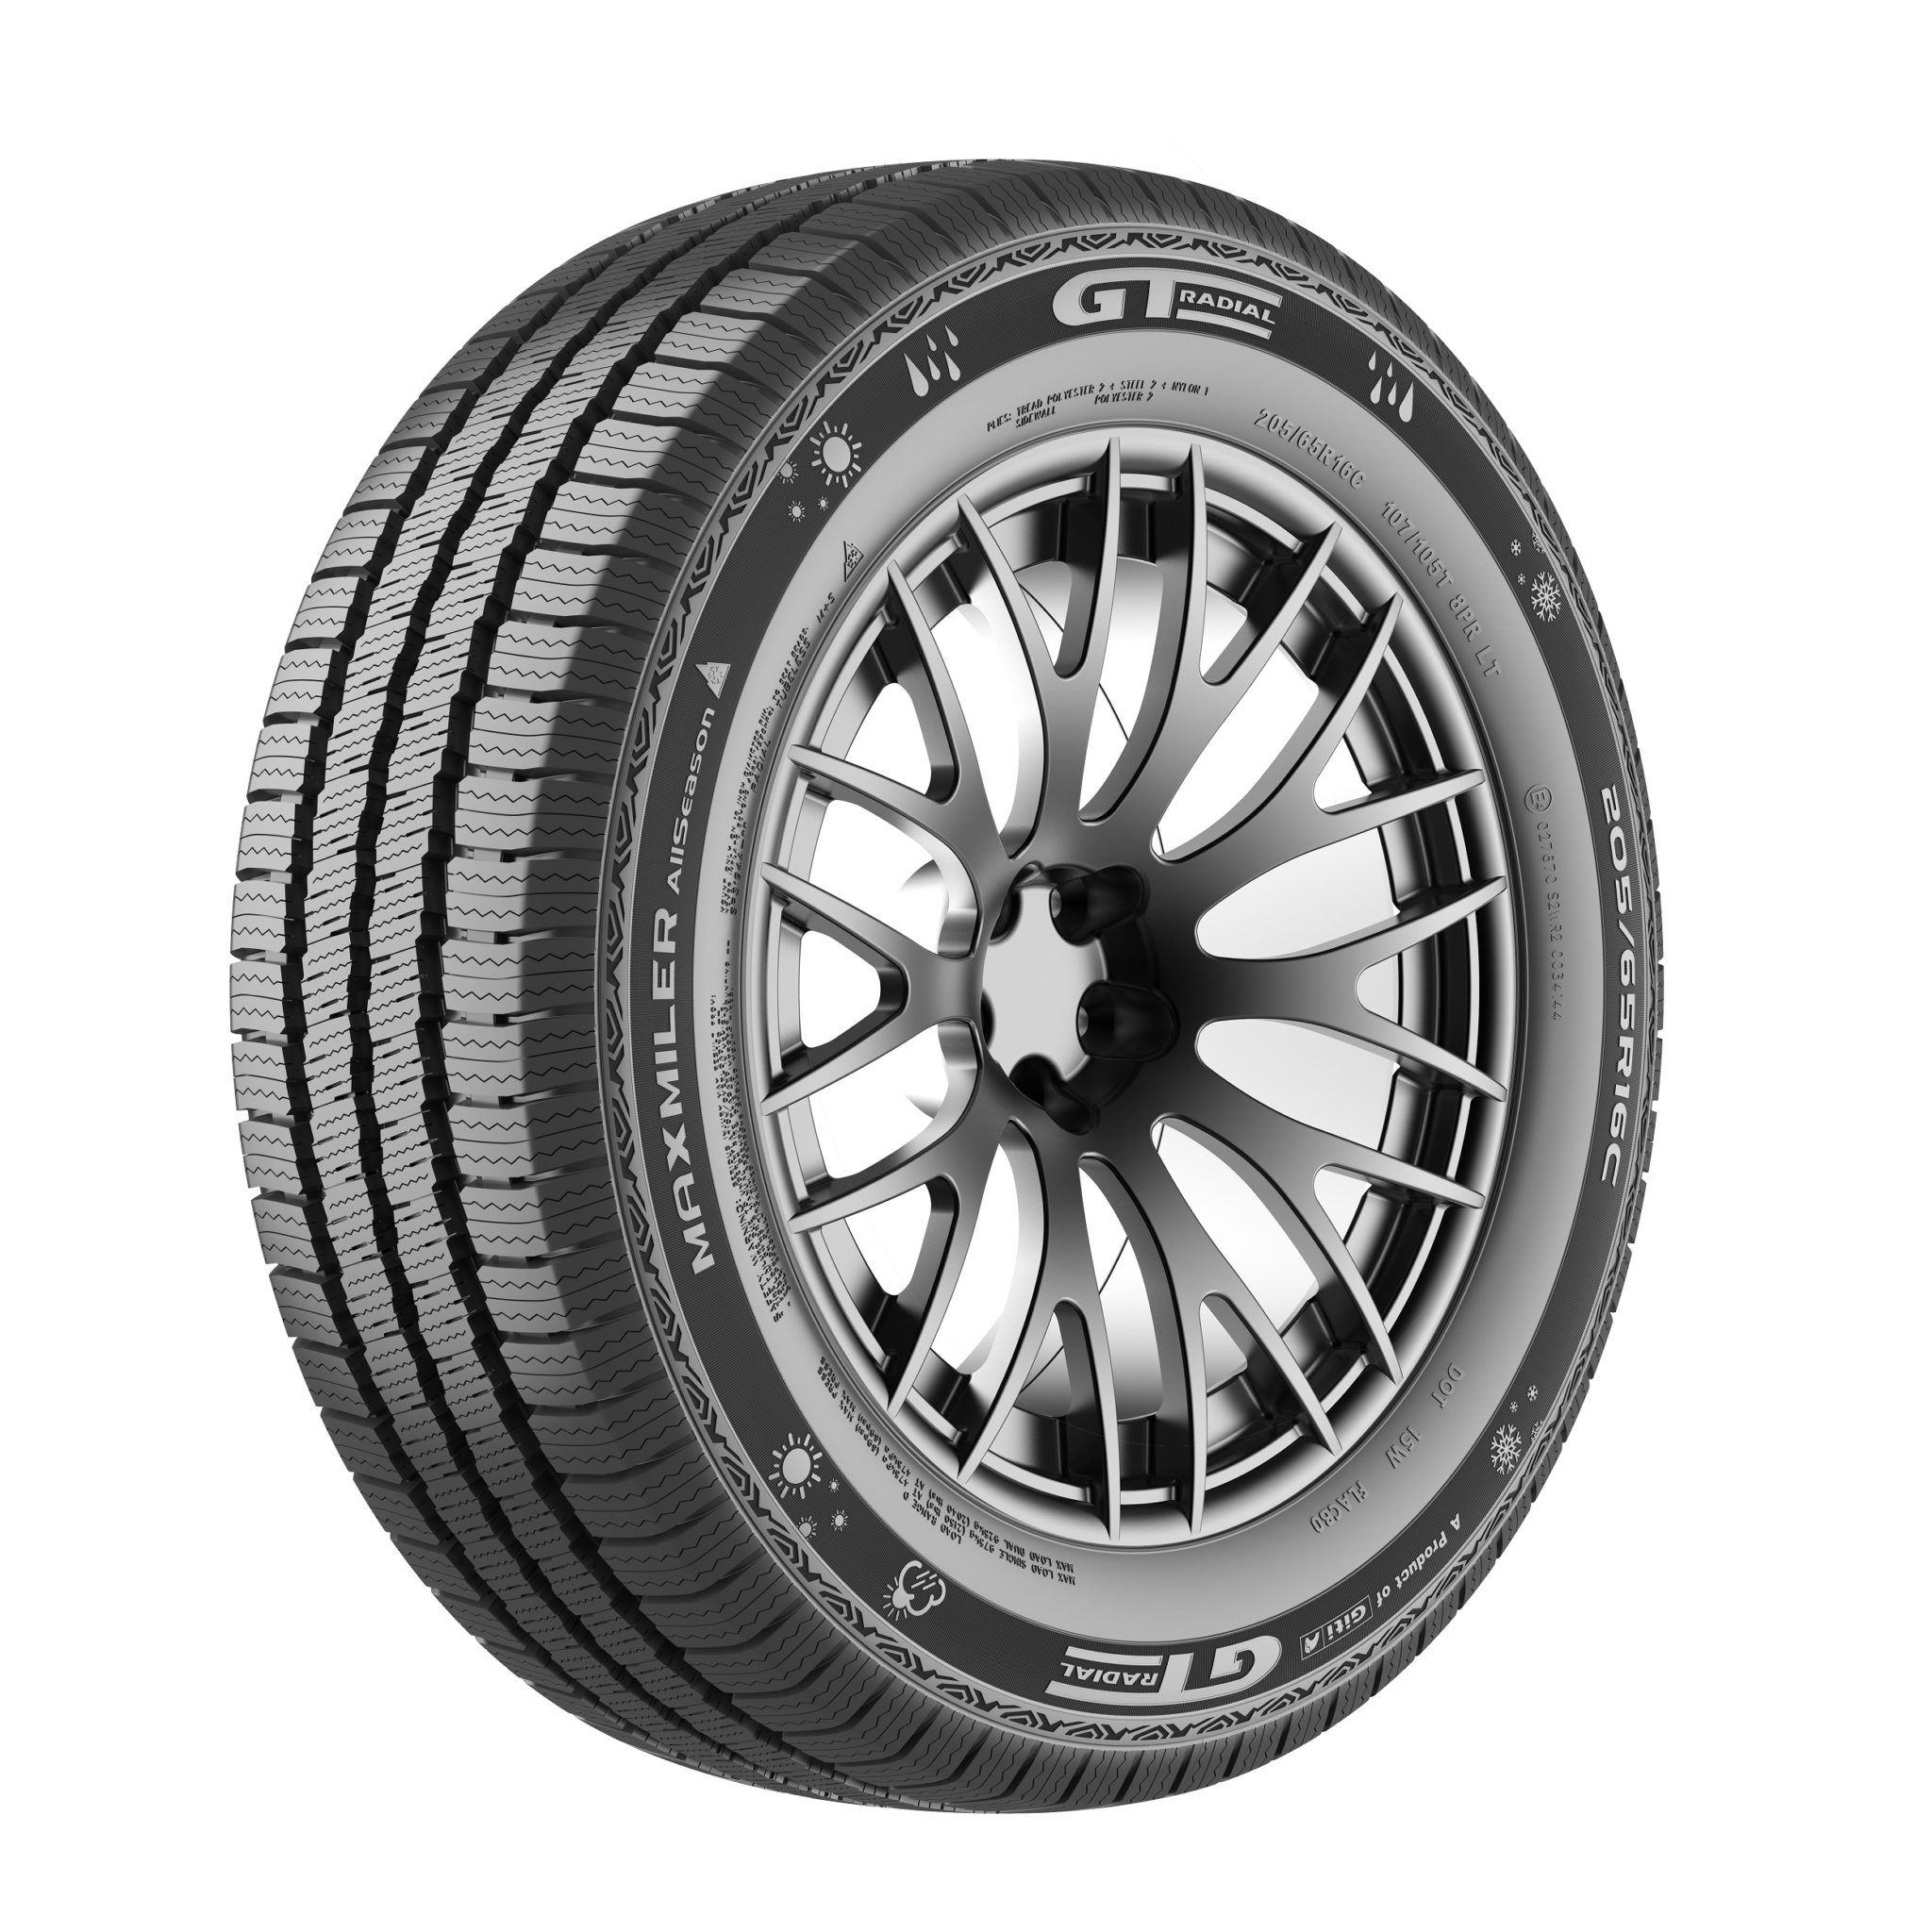 tyre van, Maxmiler Radial launches - GT light truck Tyrepress AllSeason